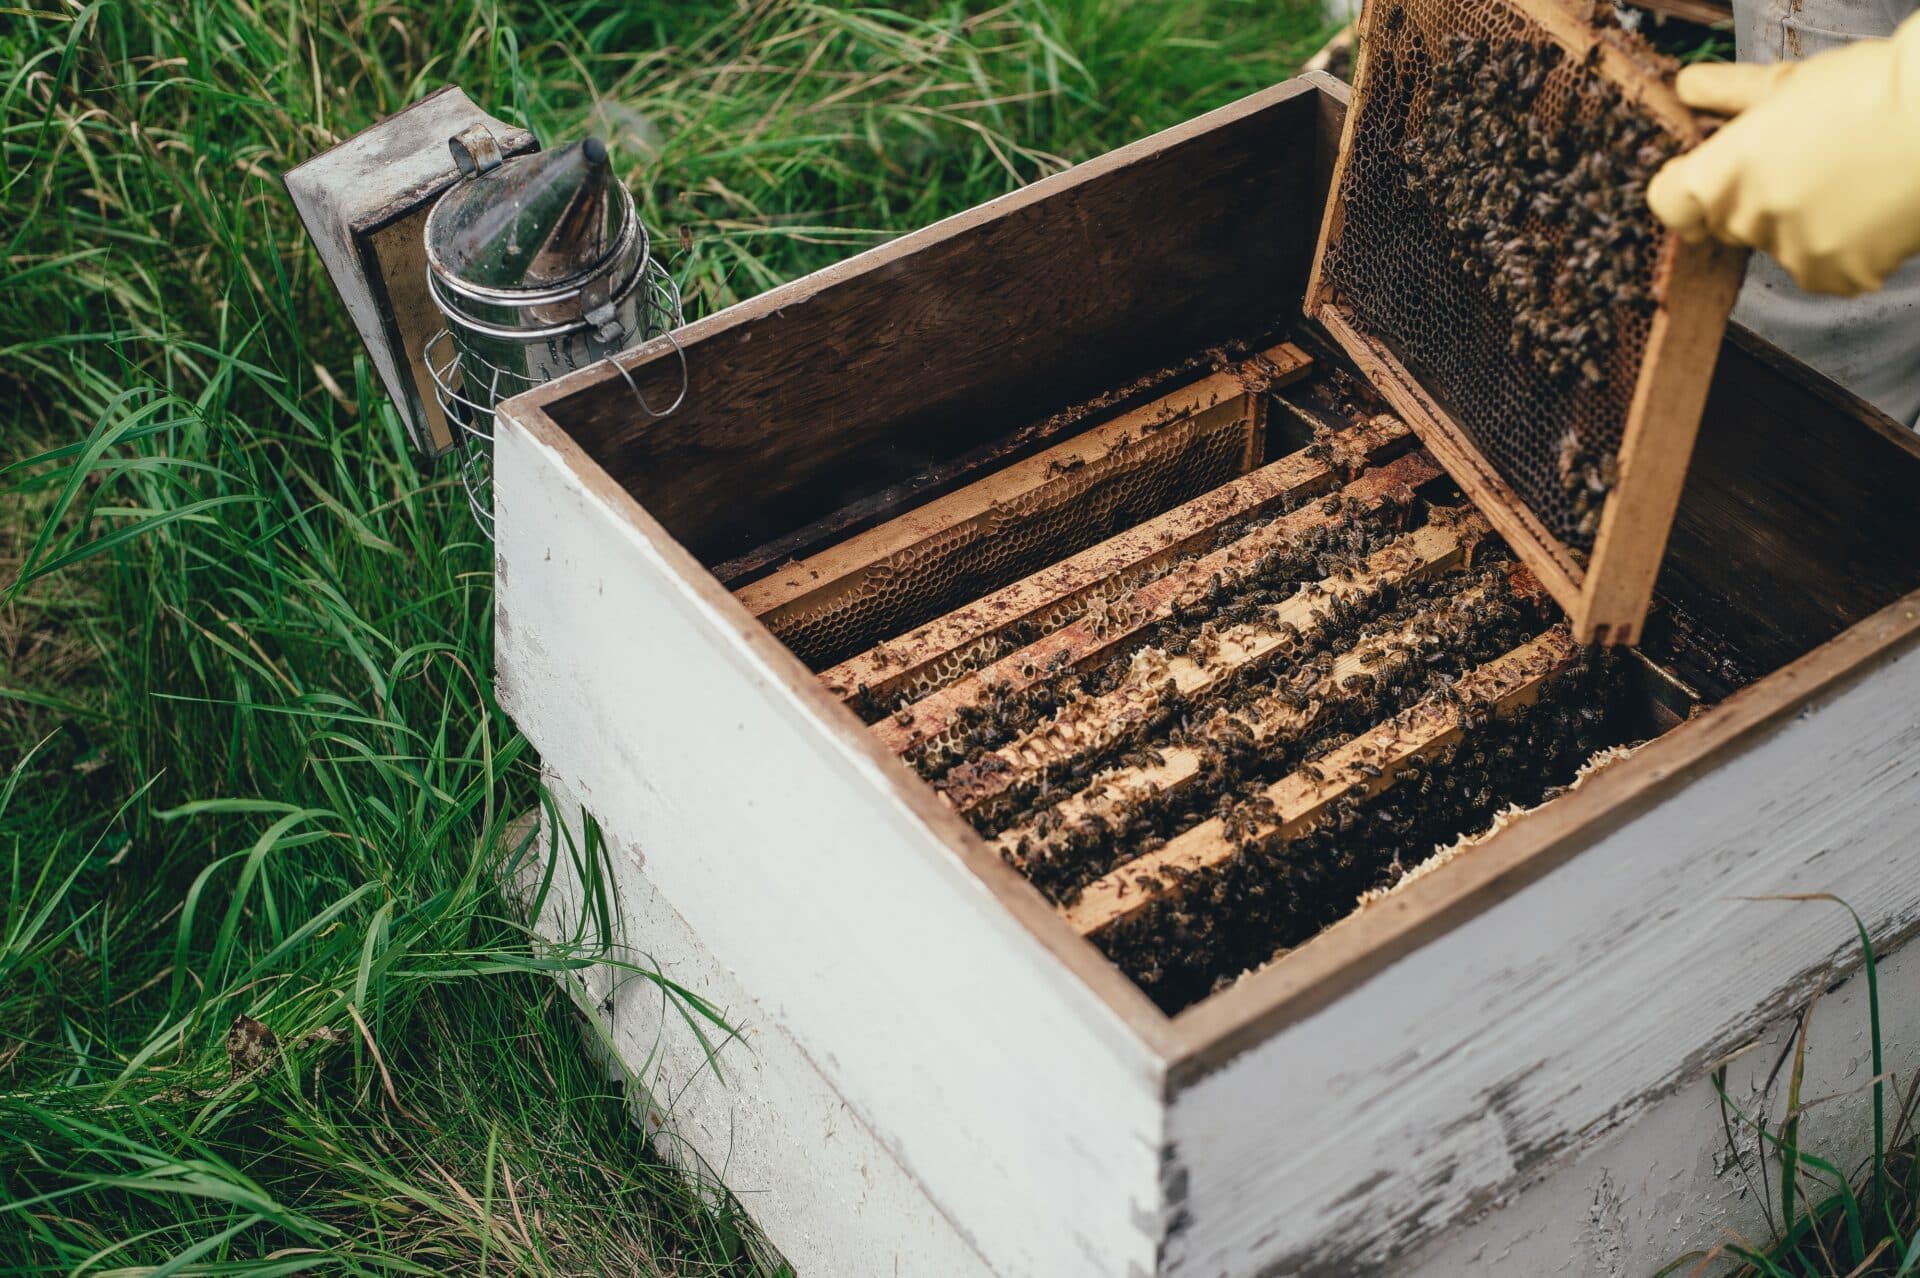 Honey bees producing New Zealand Manuka honey